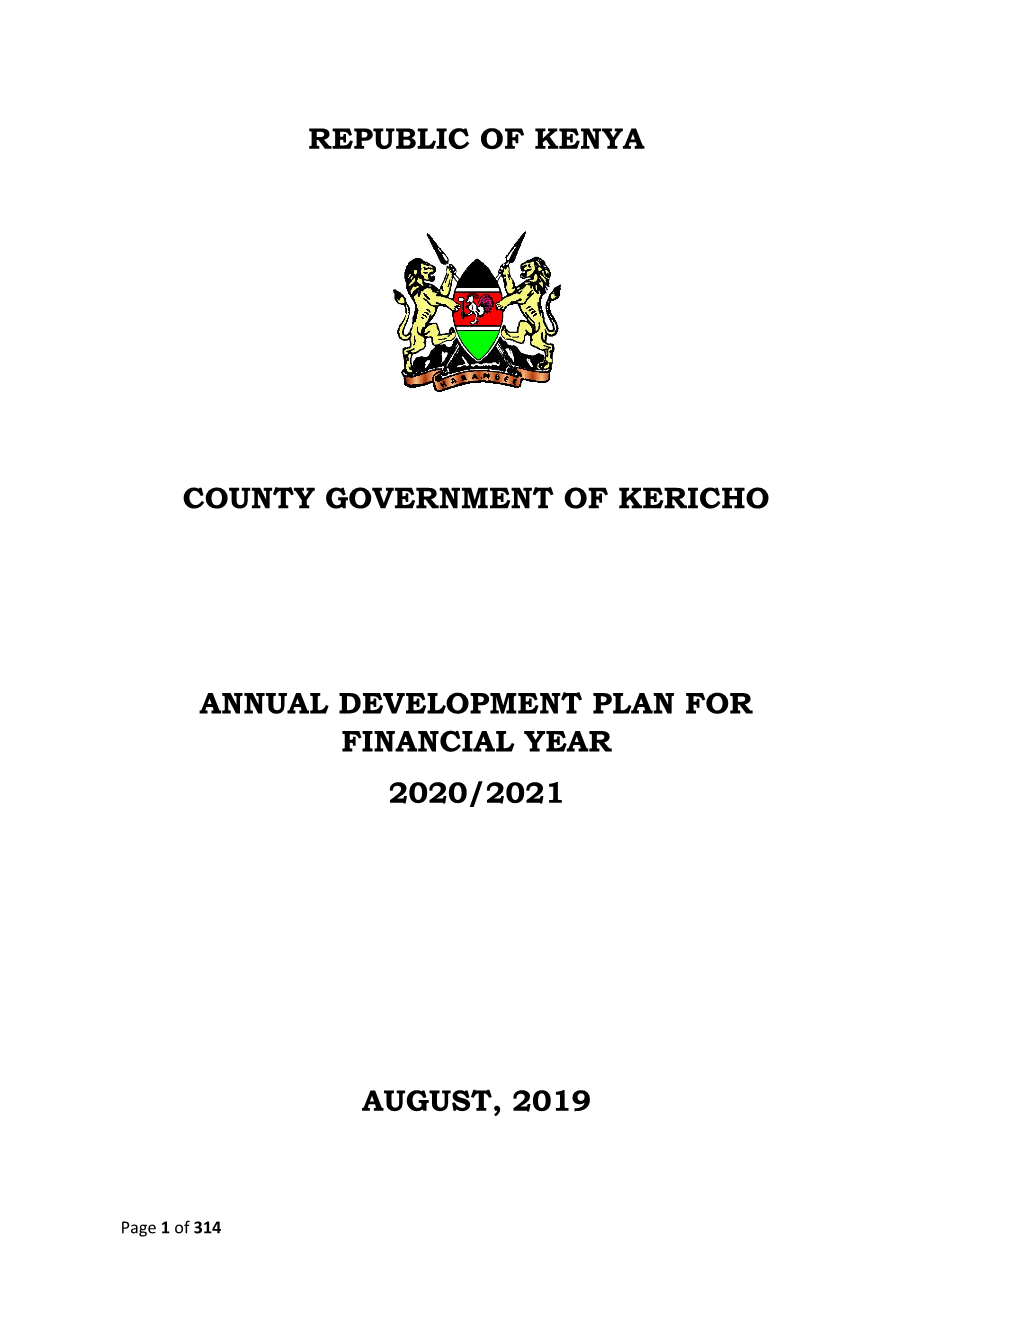 Republic of Kenya County Government of Kericho Annual Development Plan